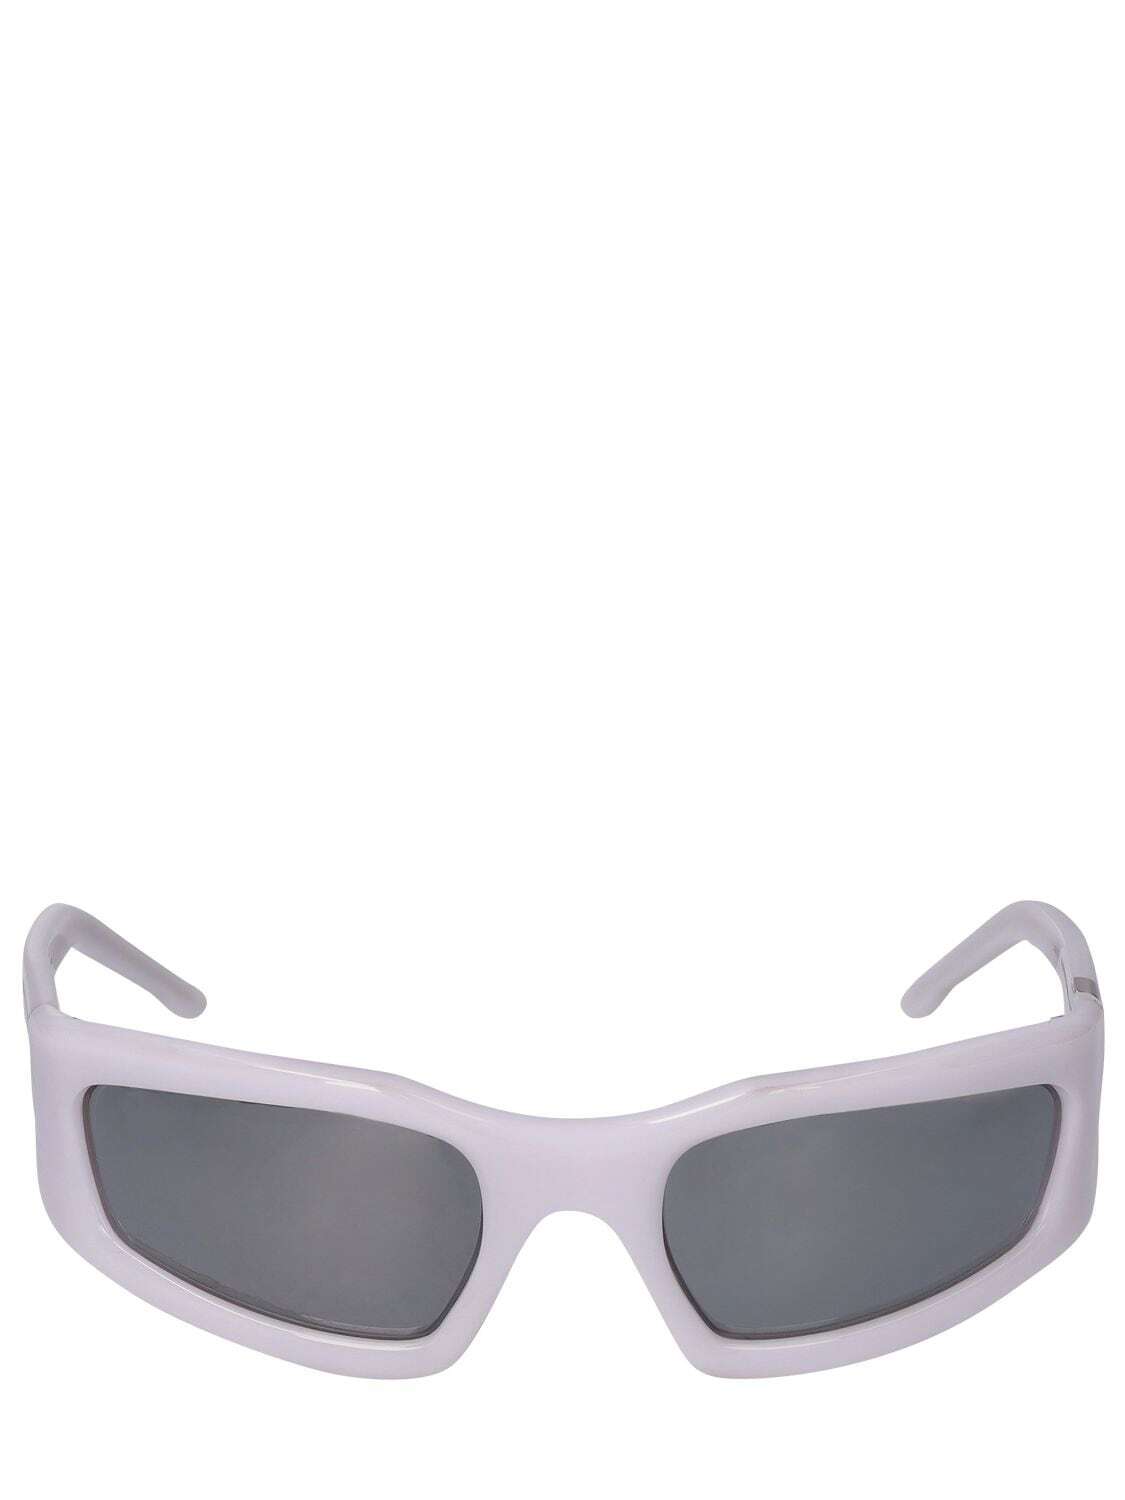 1017 ALYX 9SM Tectonic Squared Sunglasses in grey / white